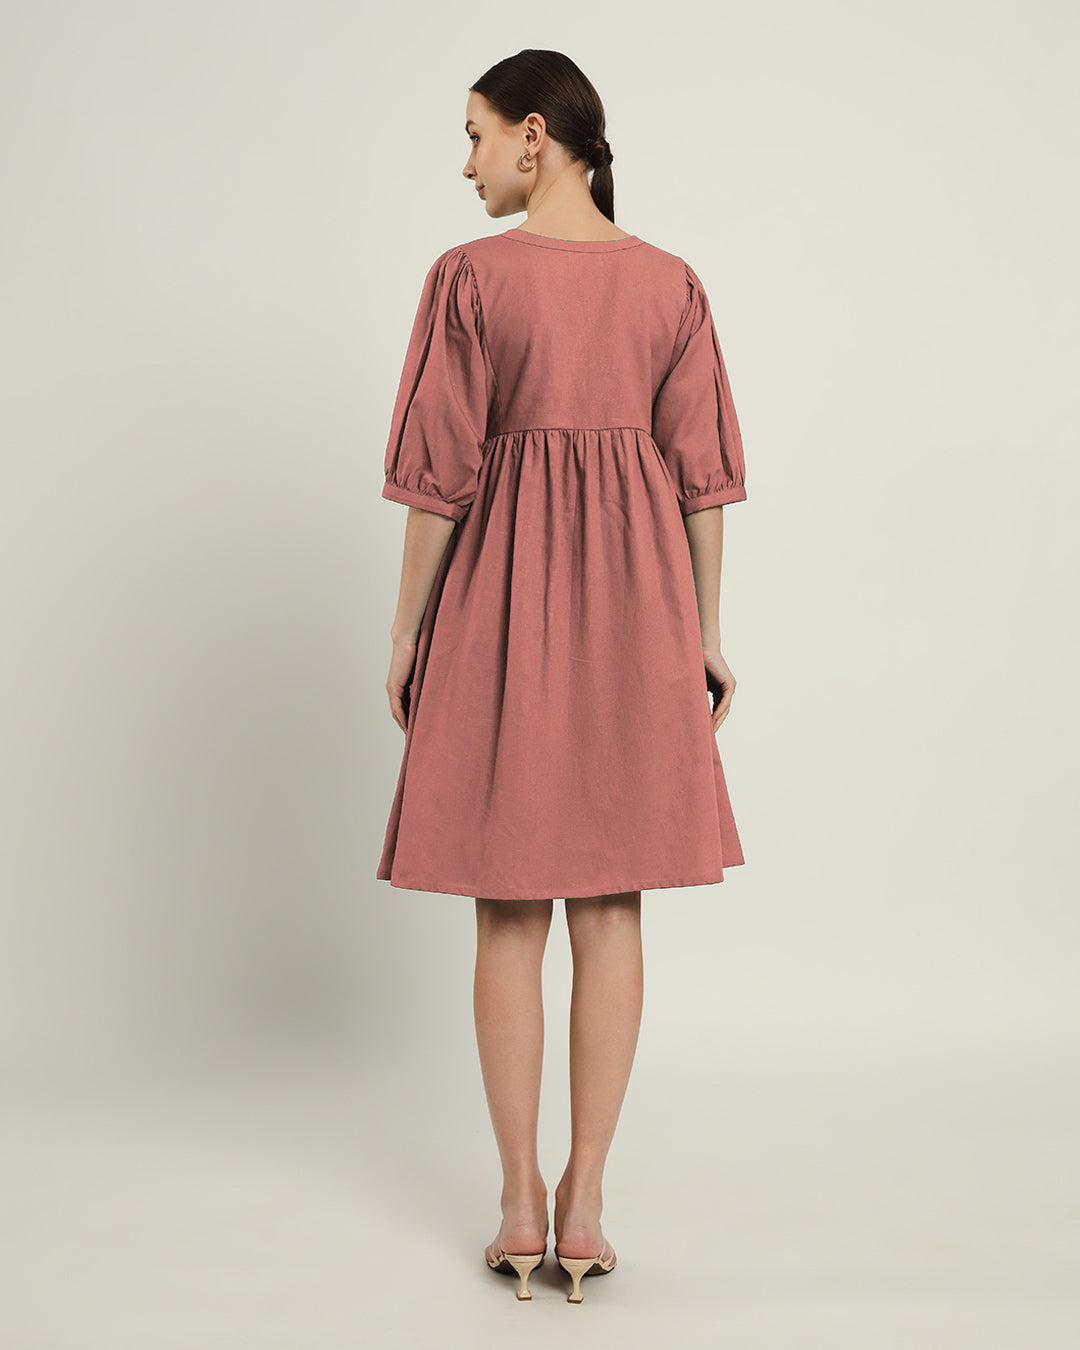 The Aira Ivory Pink Cotton Dress